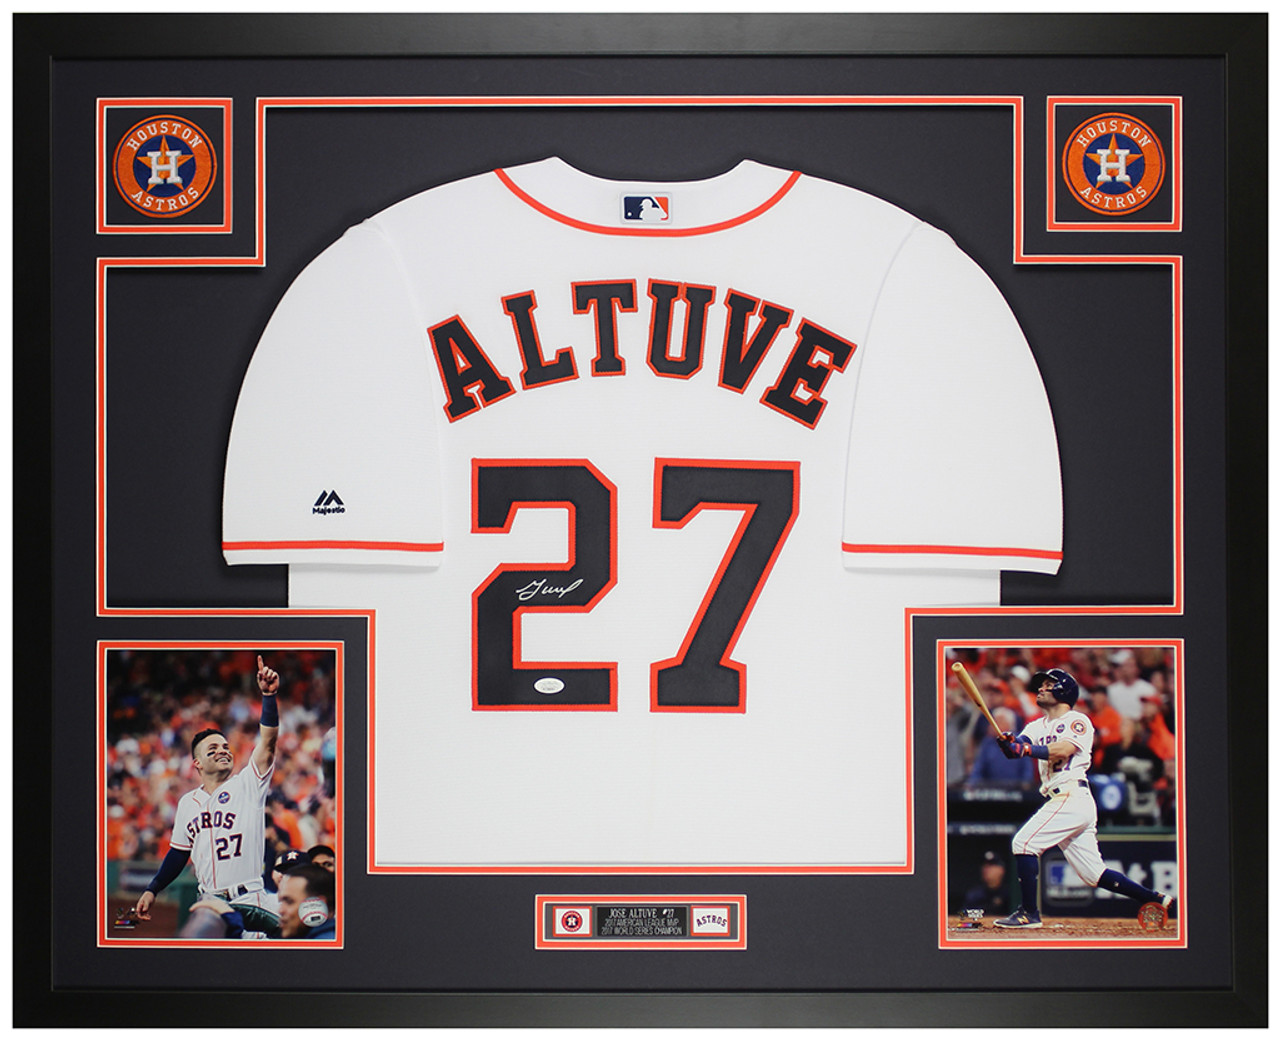 Jose Altuve Autographed and Framed Houston Astros Jersey